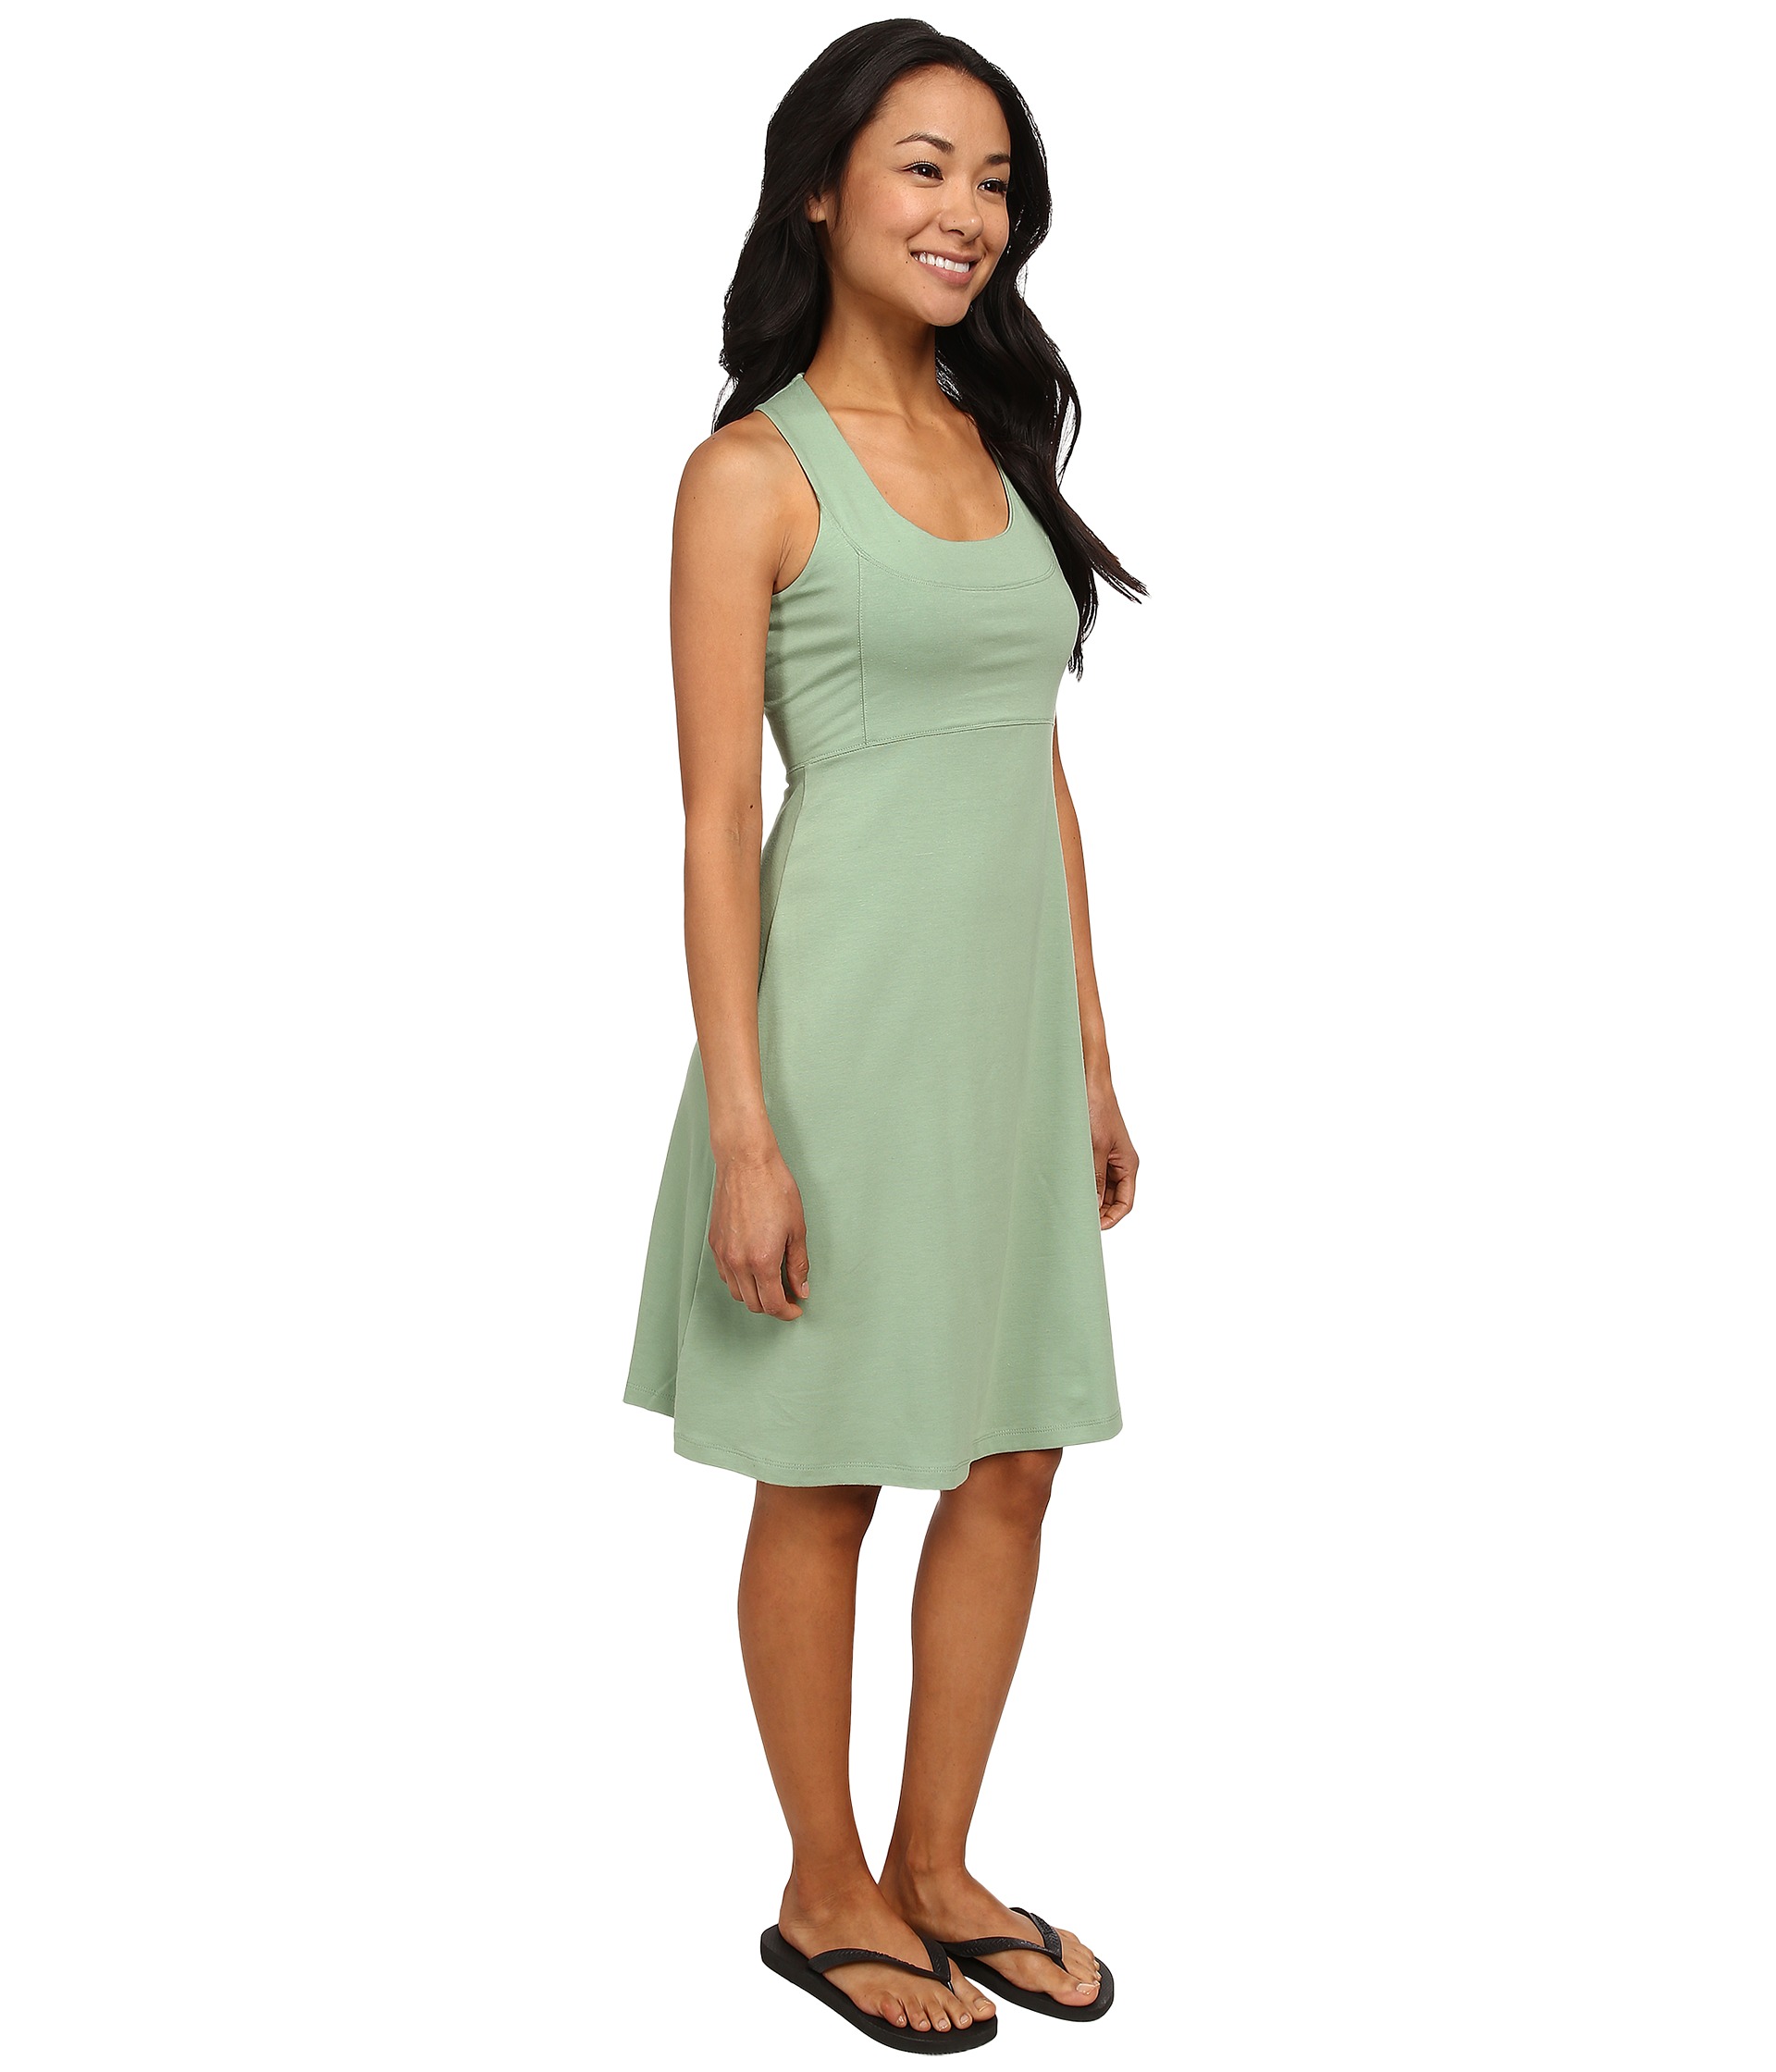 FIG Clothing Esu Dress - Zappos Free Shipping BOTH Ways